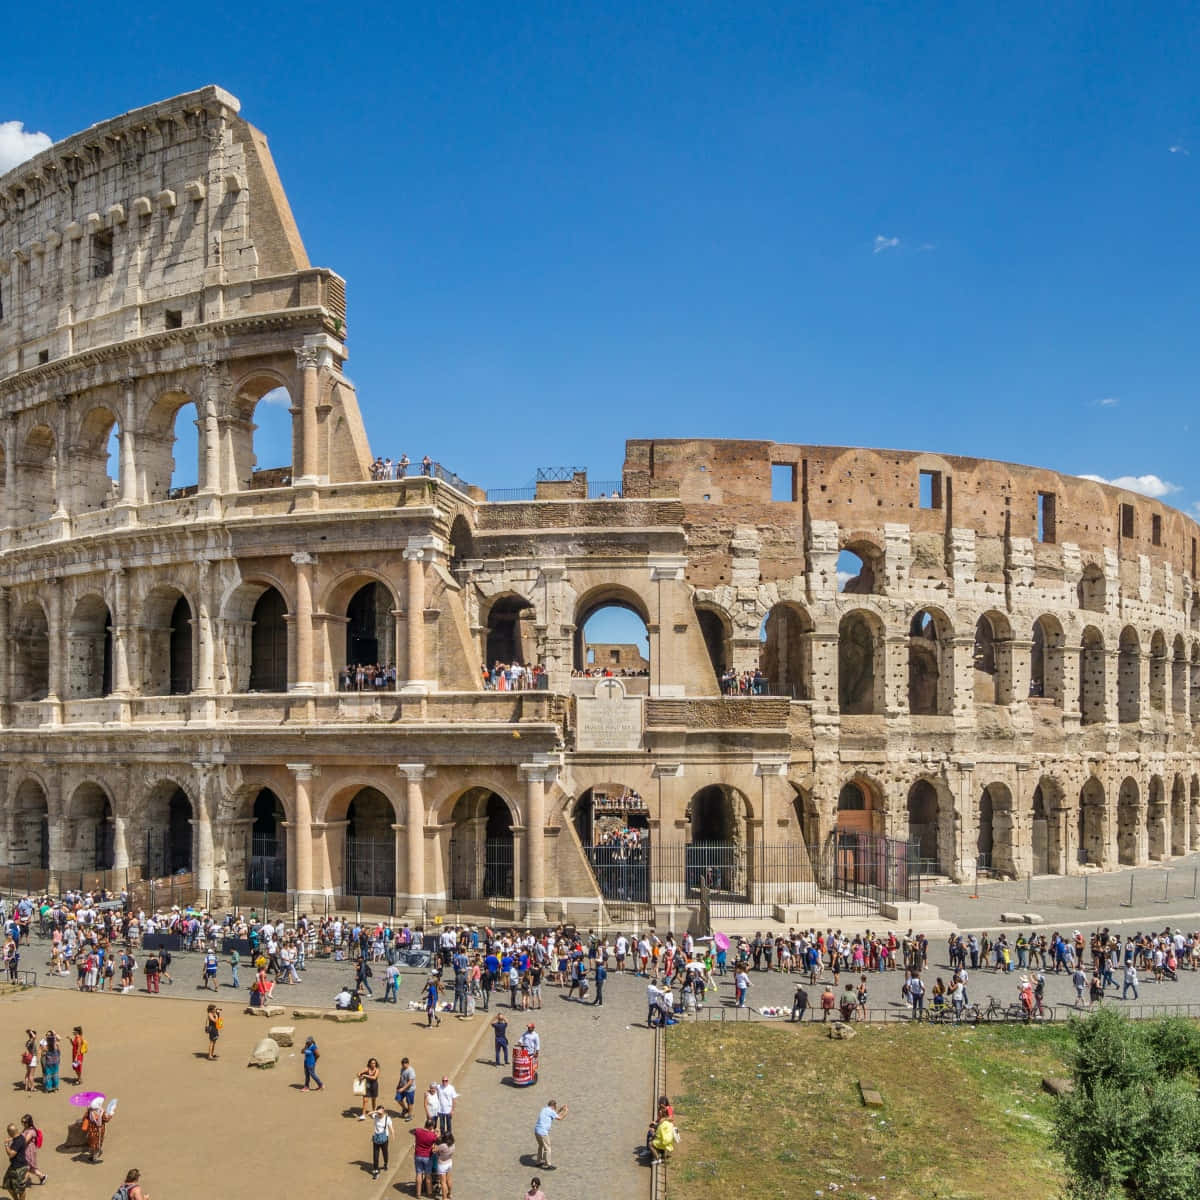 The Ancient Roman Colosseum